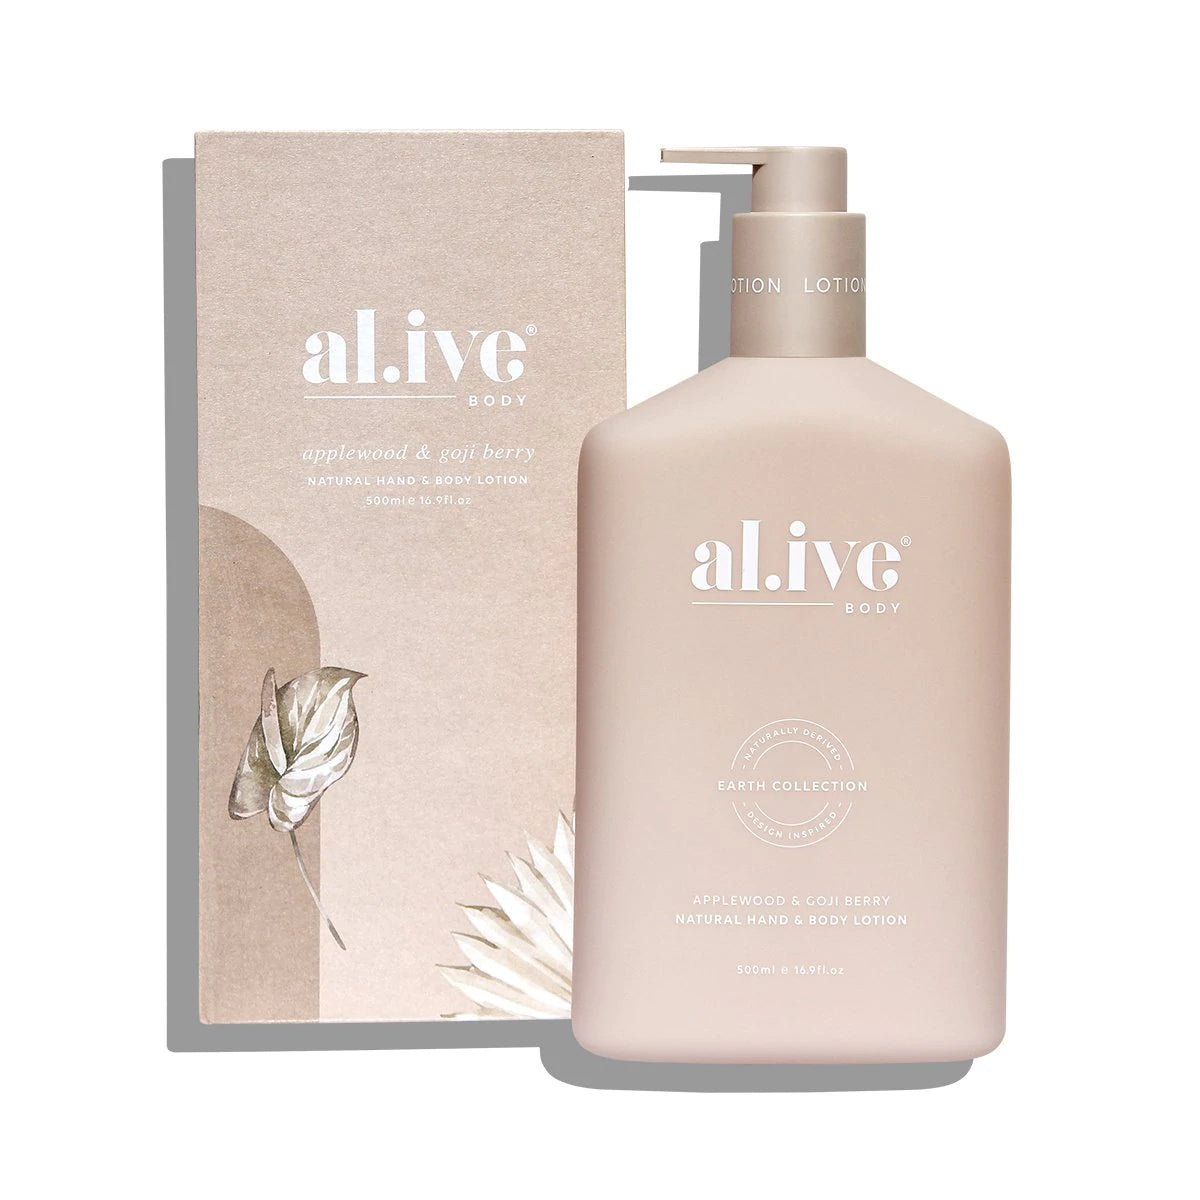 alive body applewood & goji berry lotion | alive body 